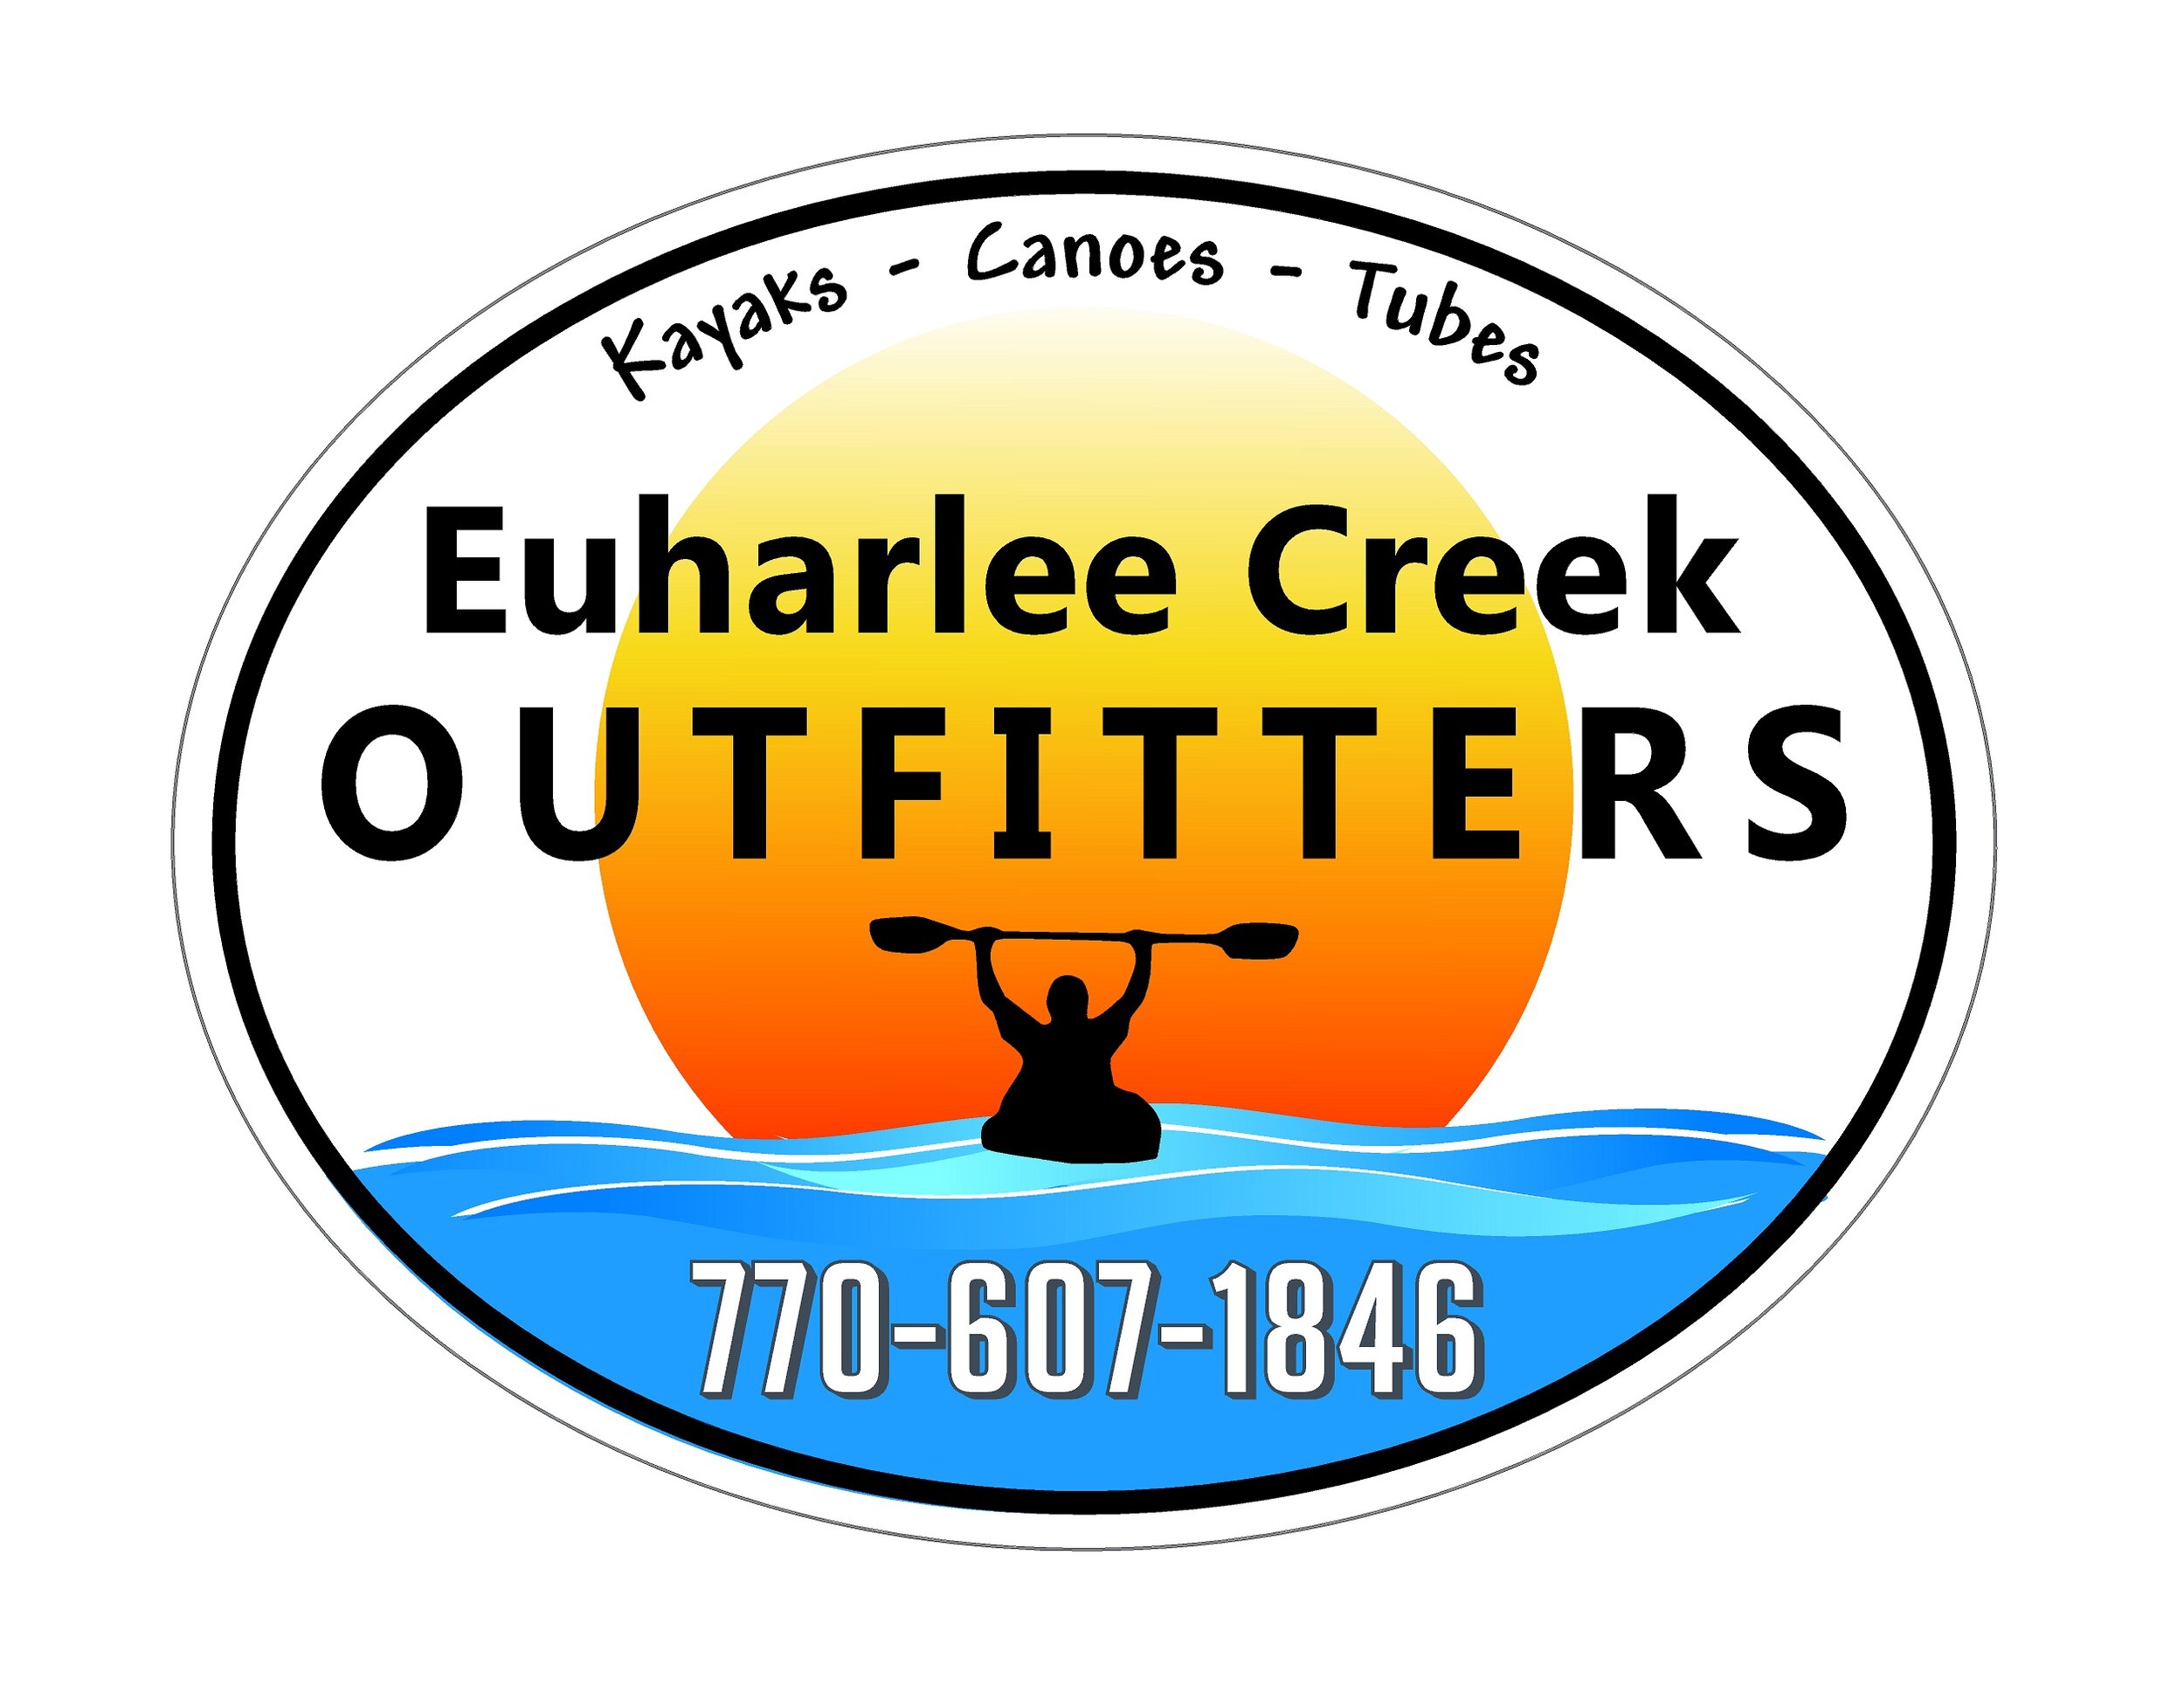 Euharlee Creek Outfitters